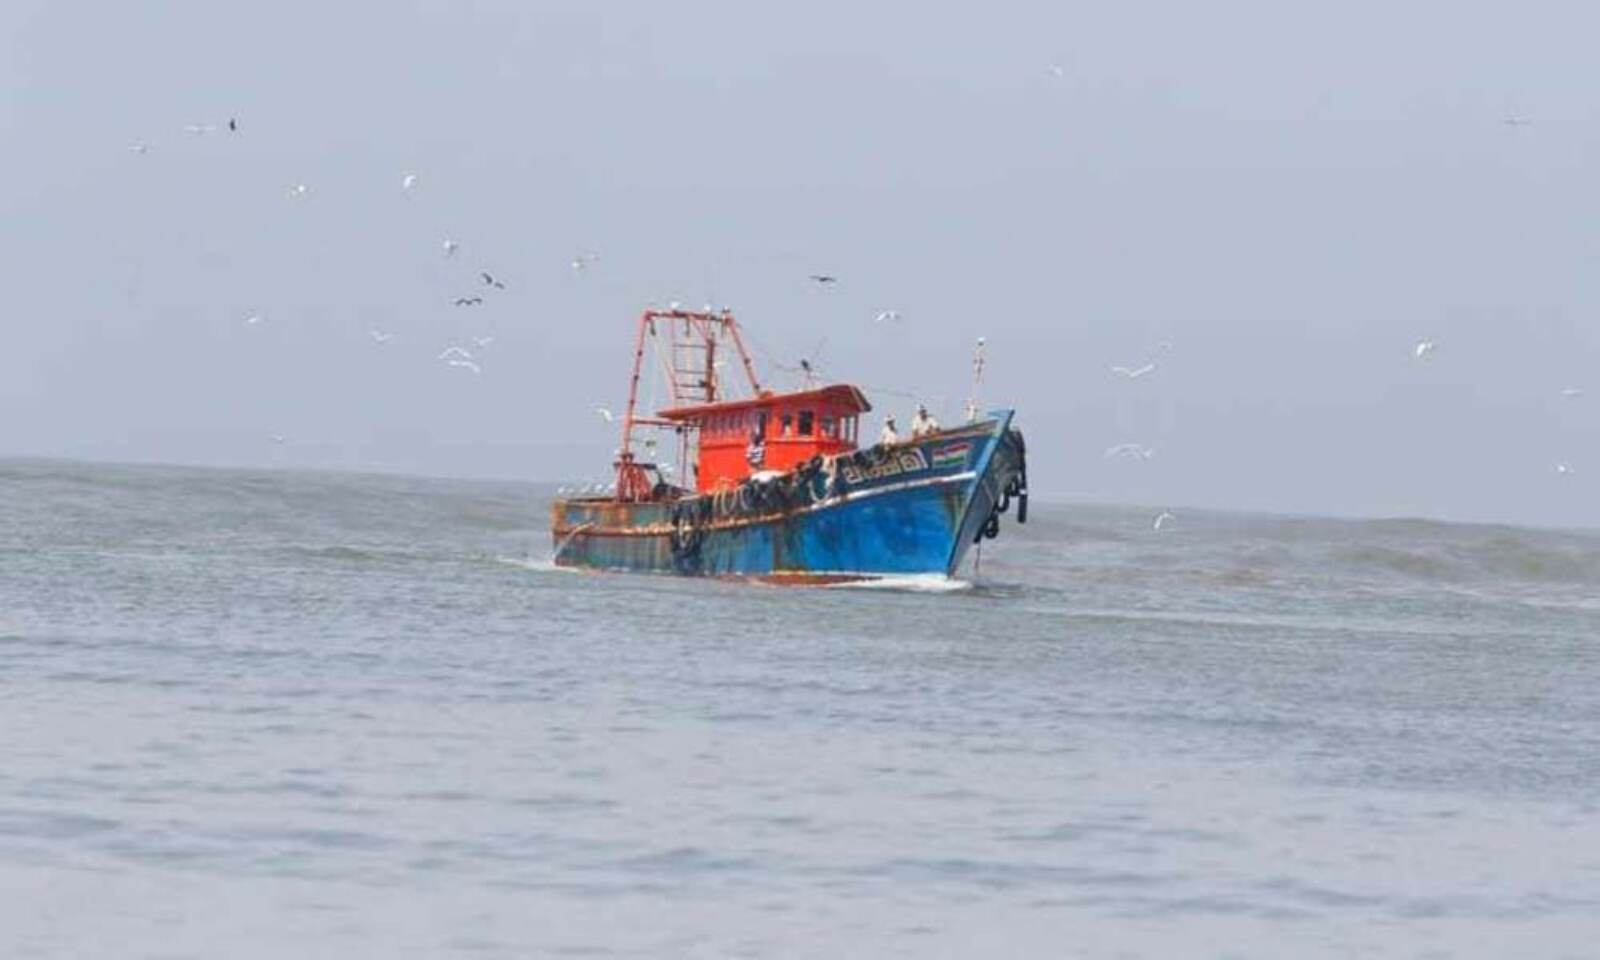 Missing Kerala fishing boat located off Mangaluru, all crew safe